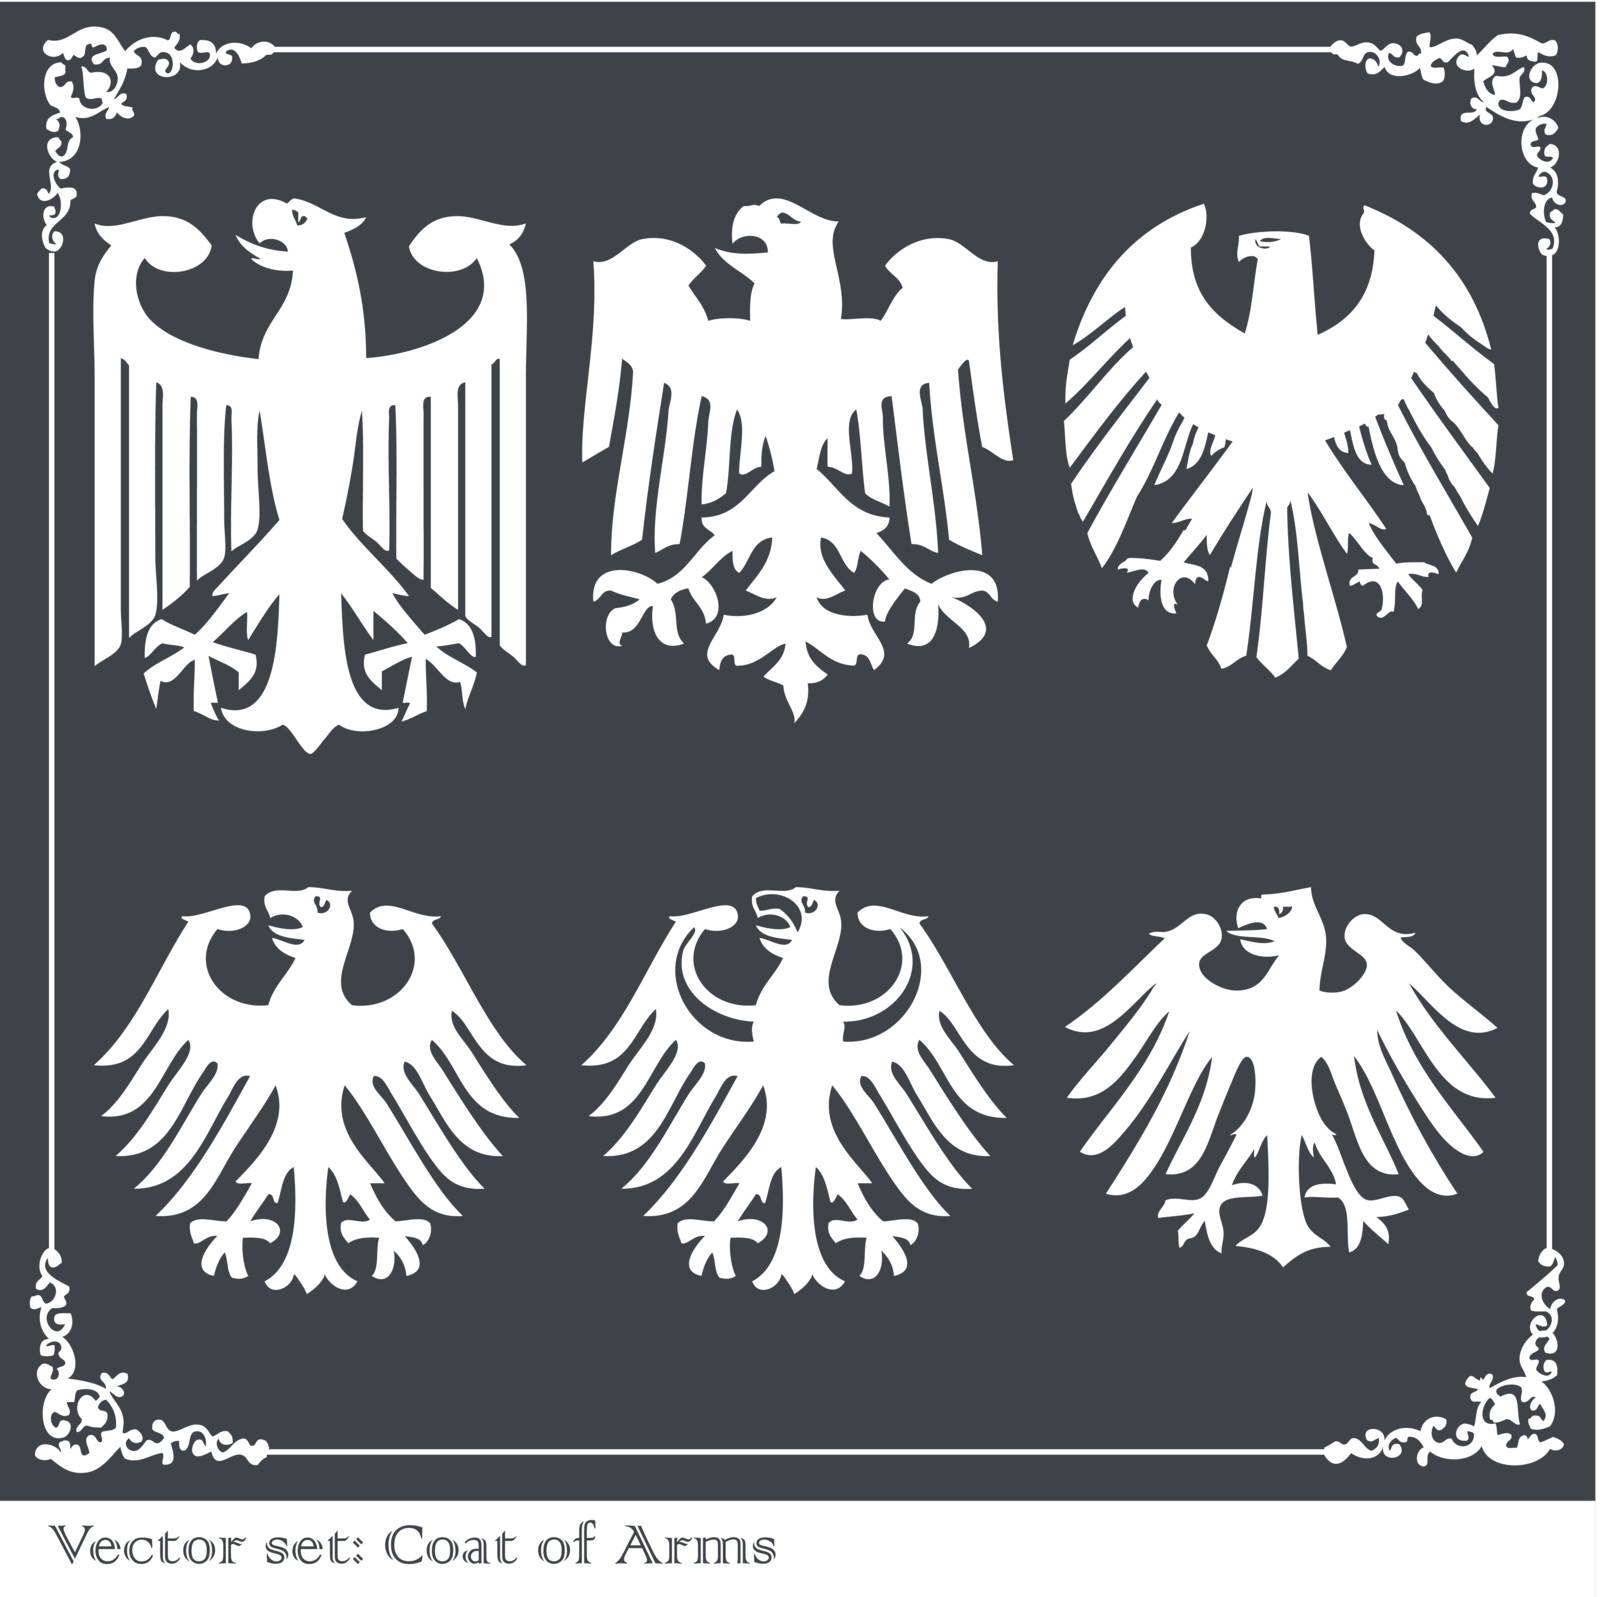 Eagle coat of arms heraldic by krabata